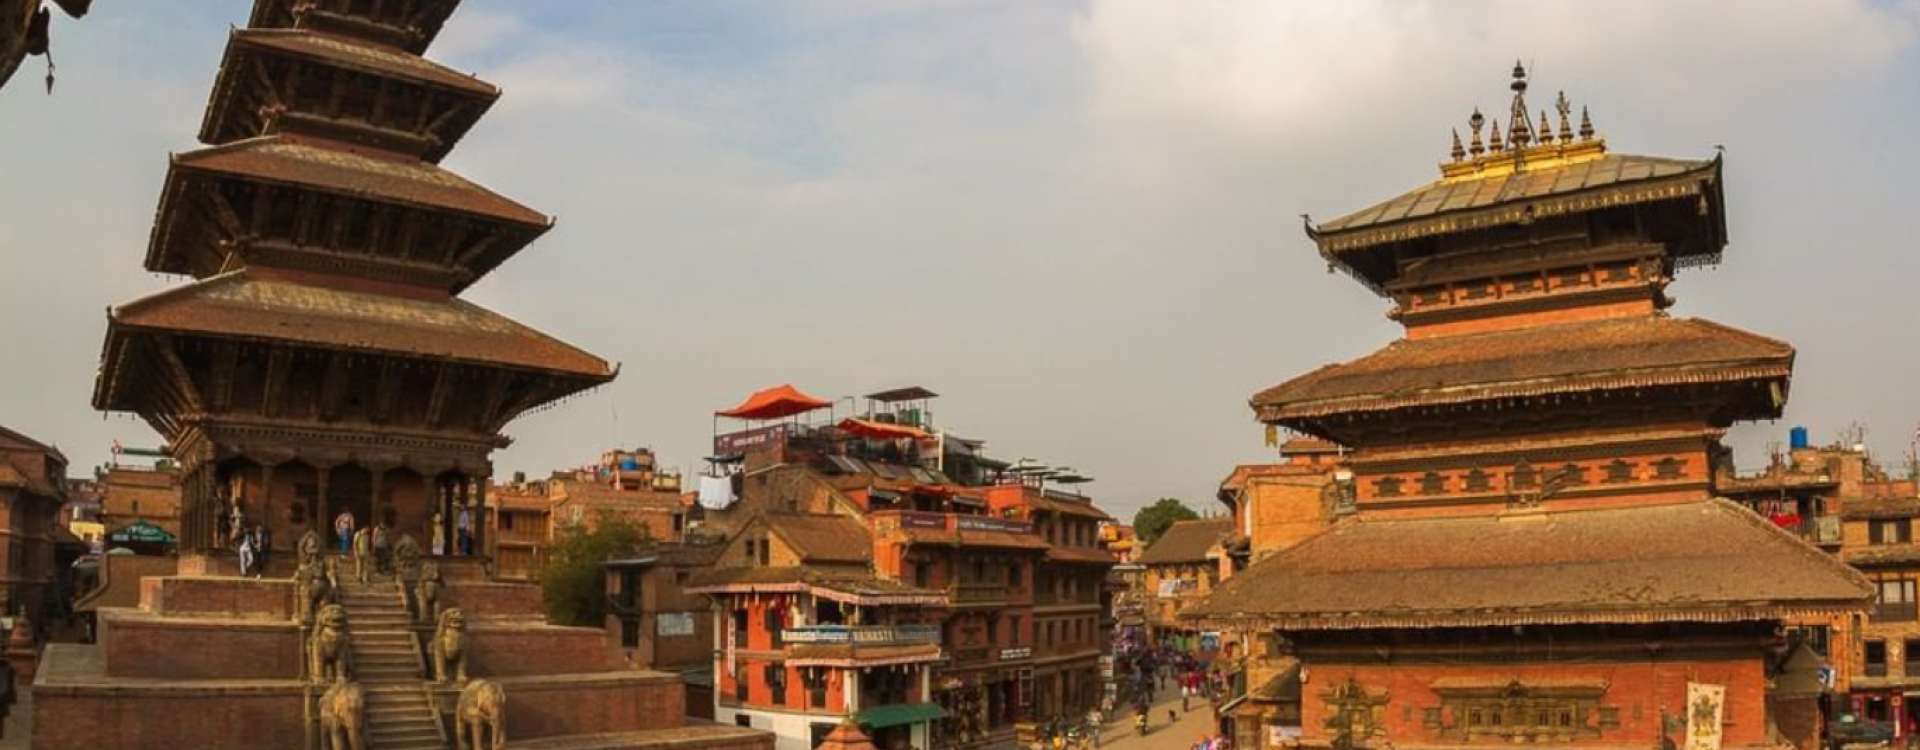 Durbar-Square-in-Nepal-1 